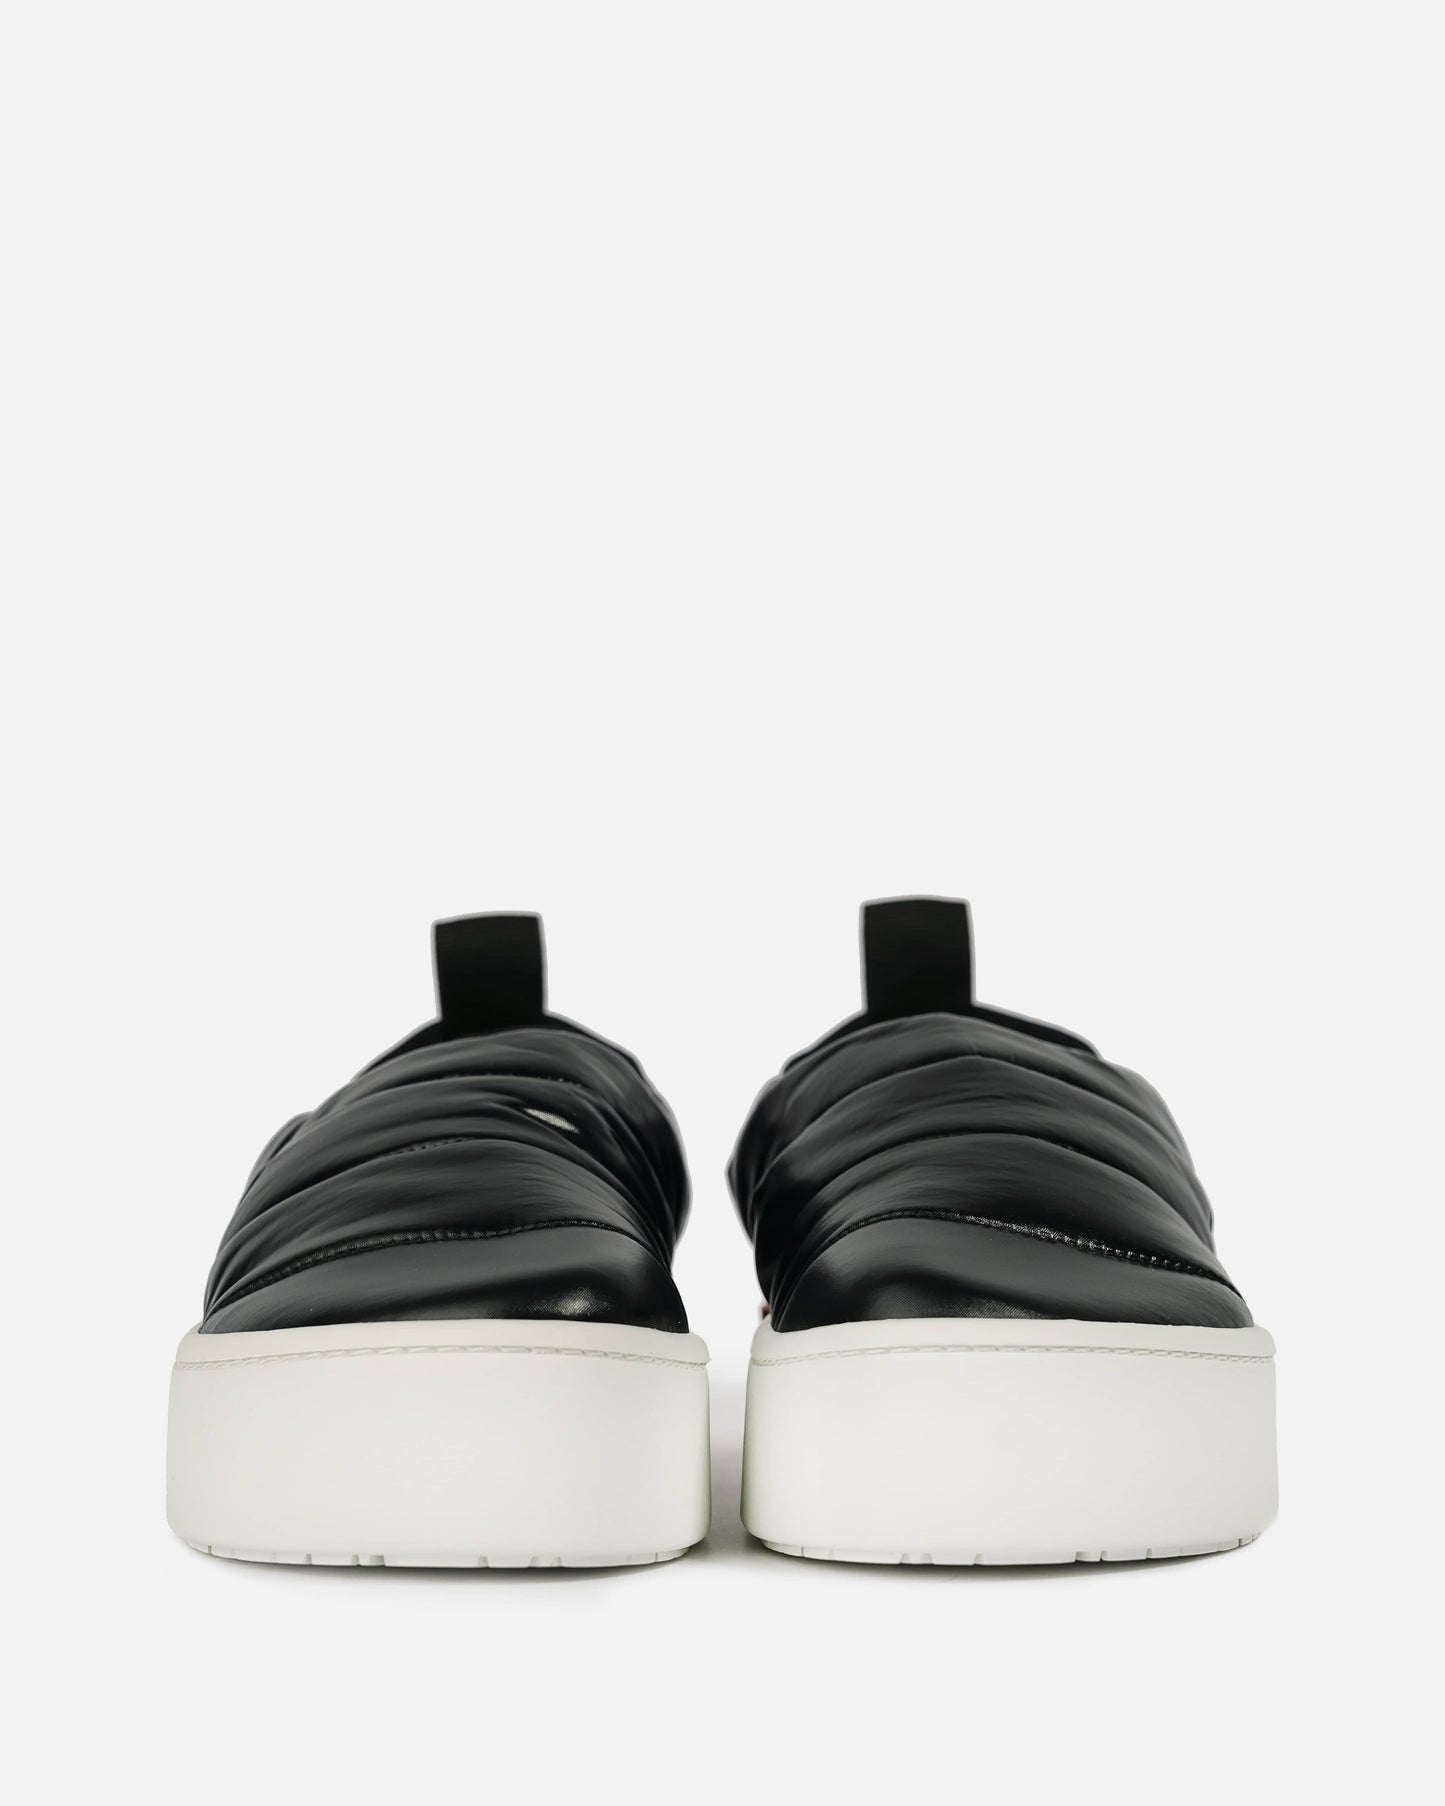 Marni Men's Sneakers Puffer Slip-On Sneakers in Black